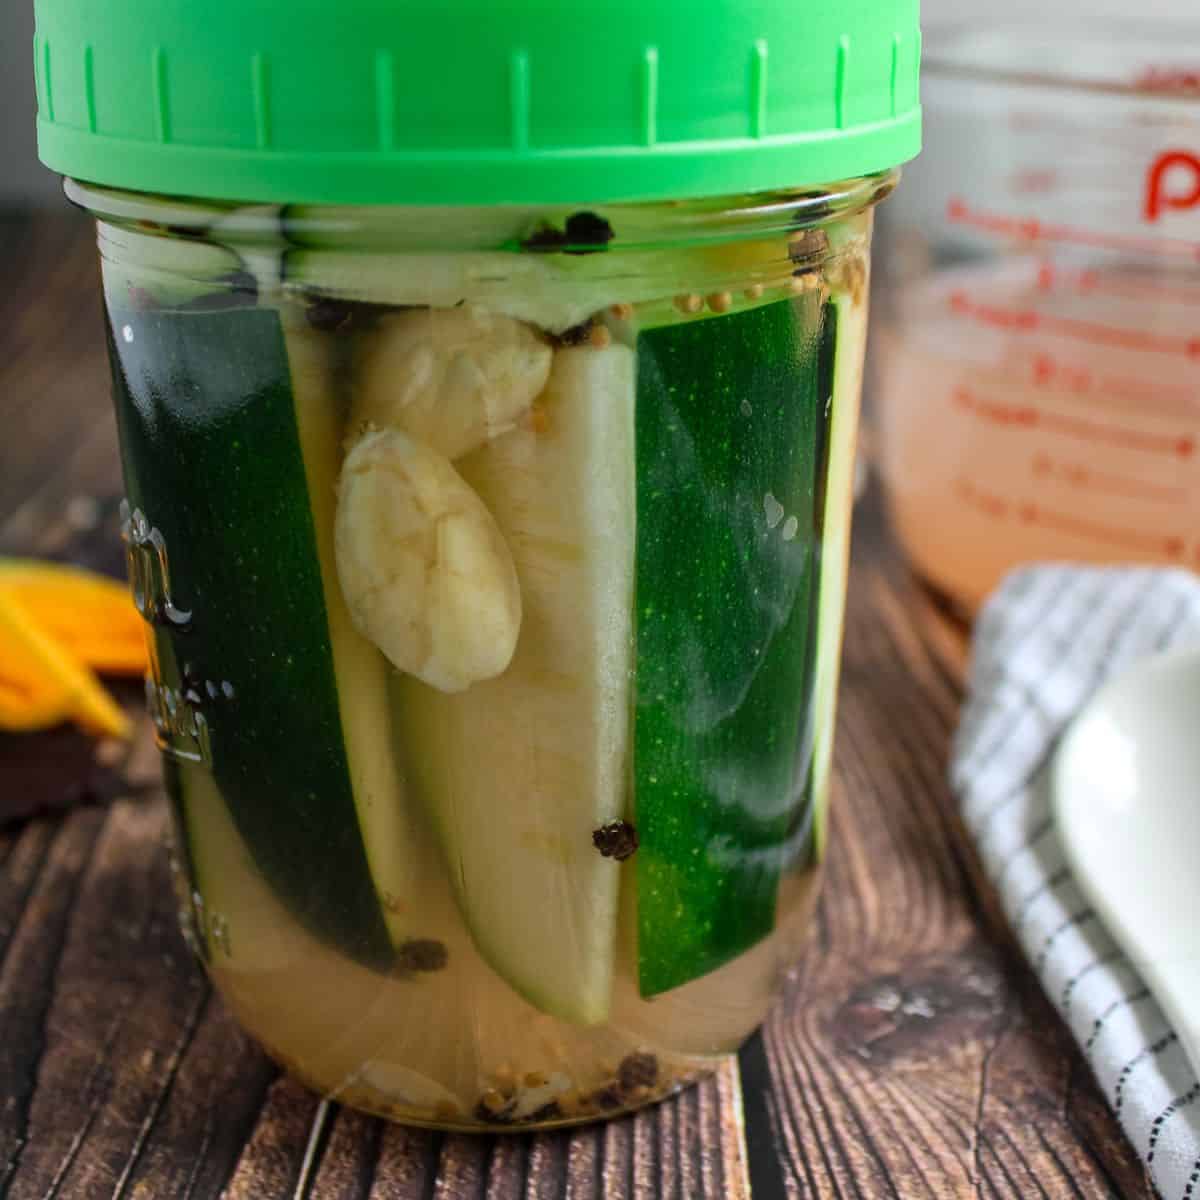 Fermened zucchini in a mason jar.